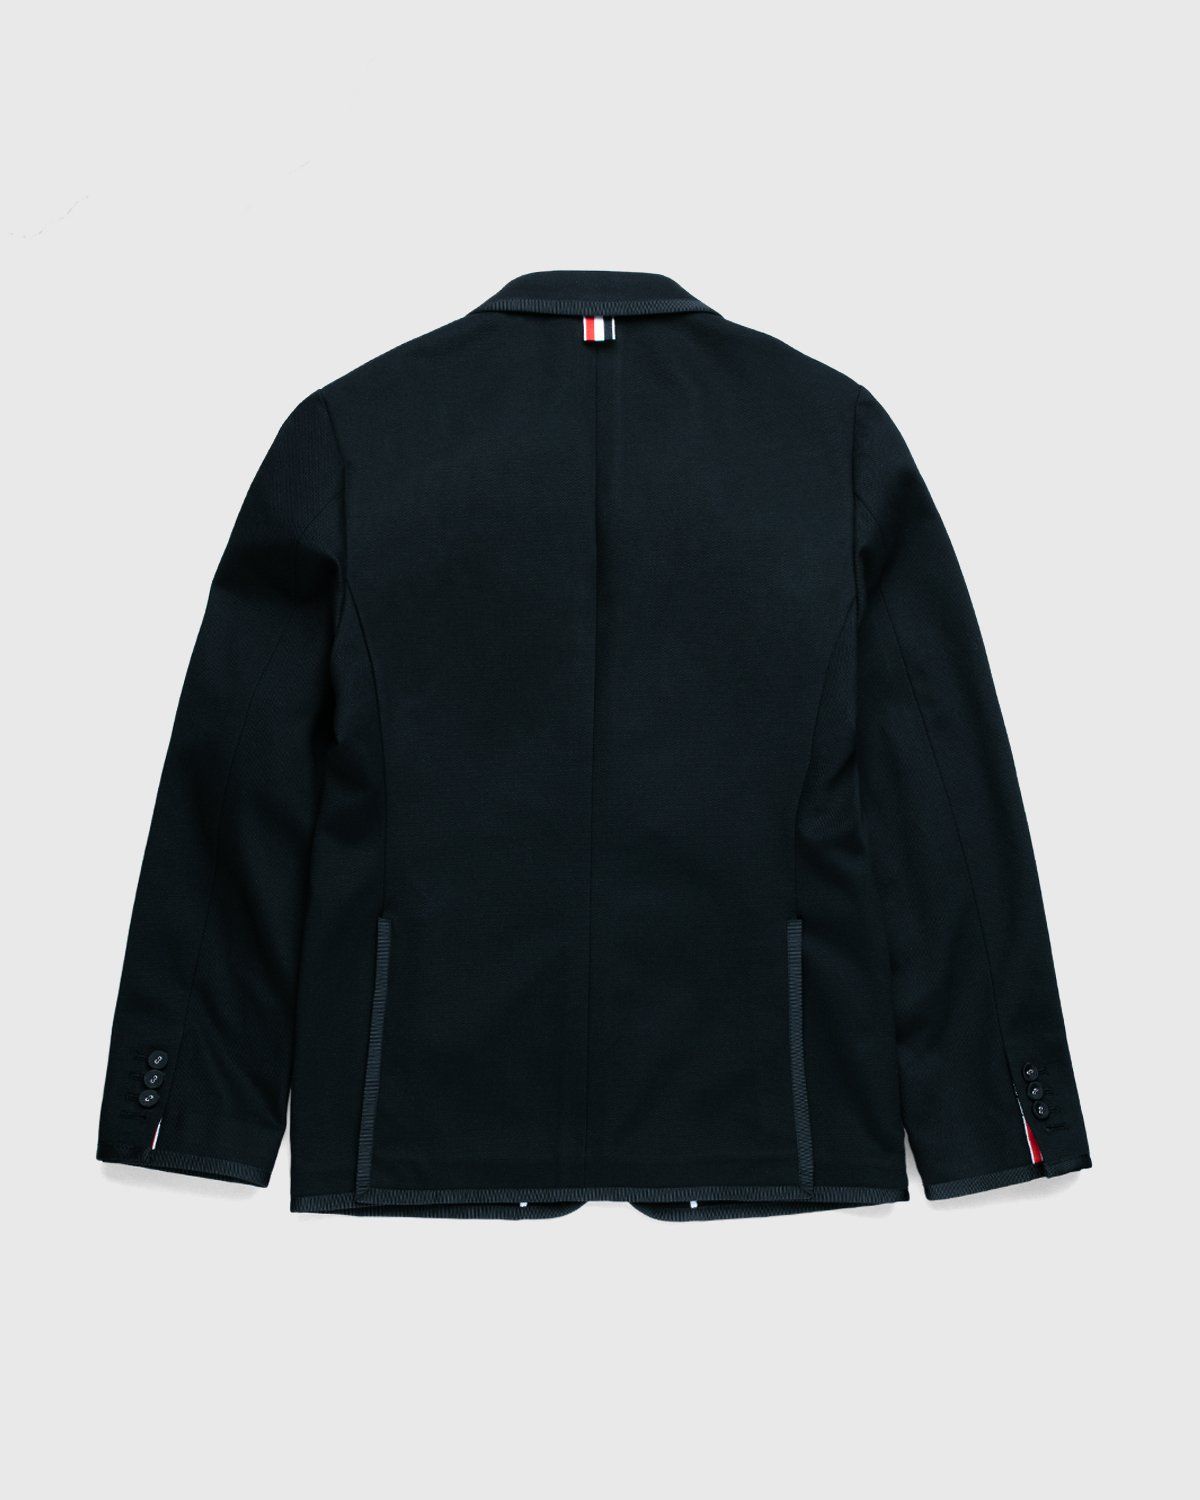 Thom Browne x Highsnobiety – Men Deconstructed Sport Jacket Black - Image 2